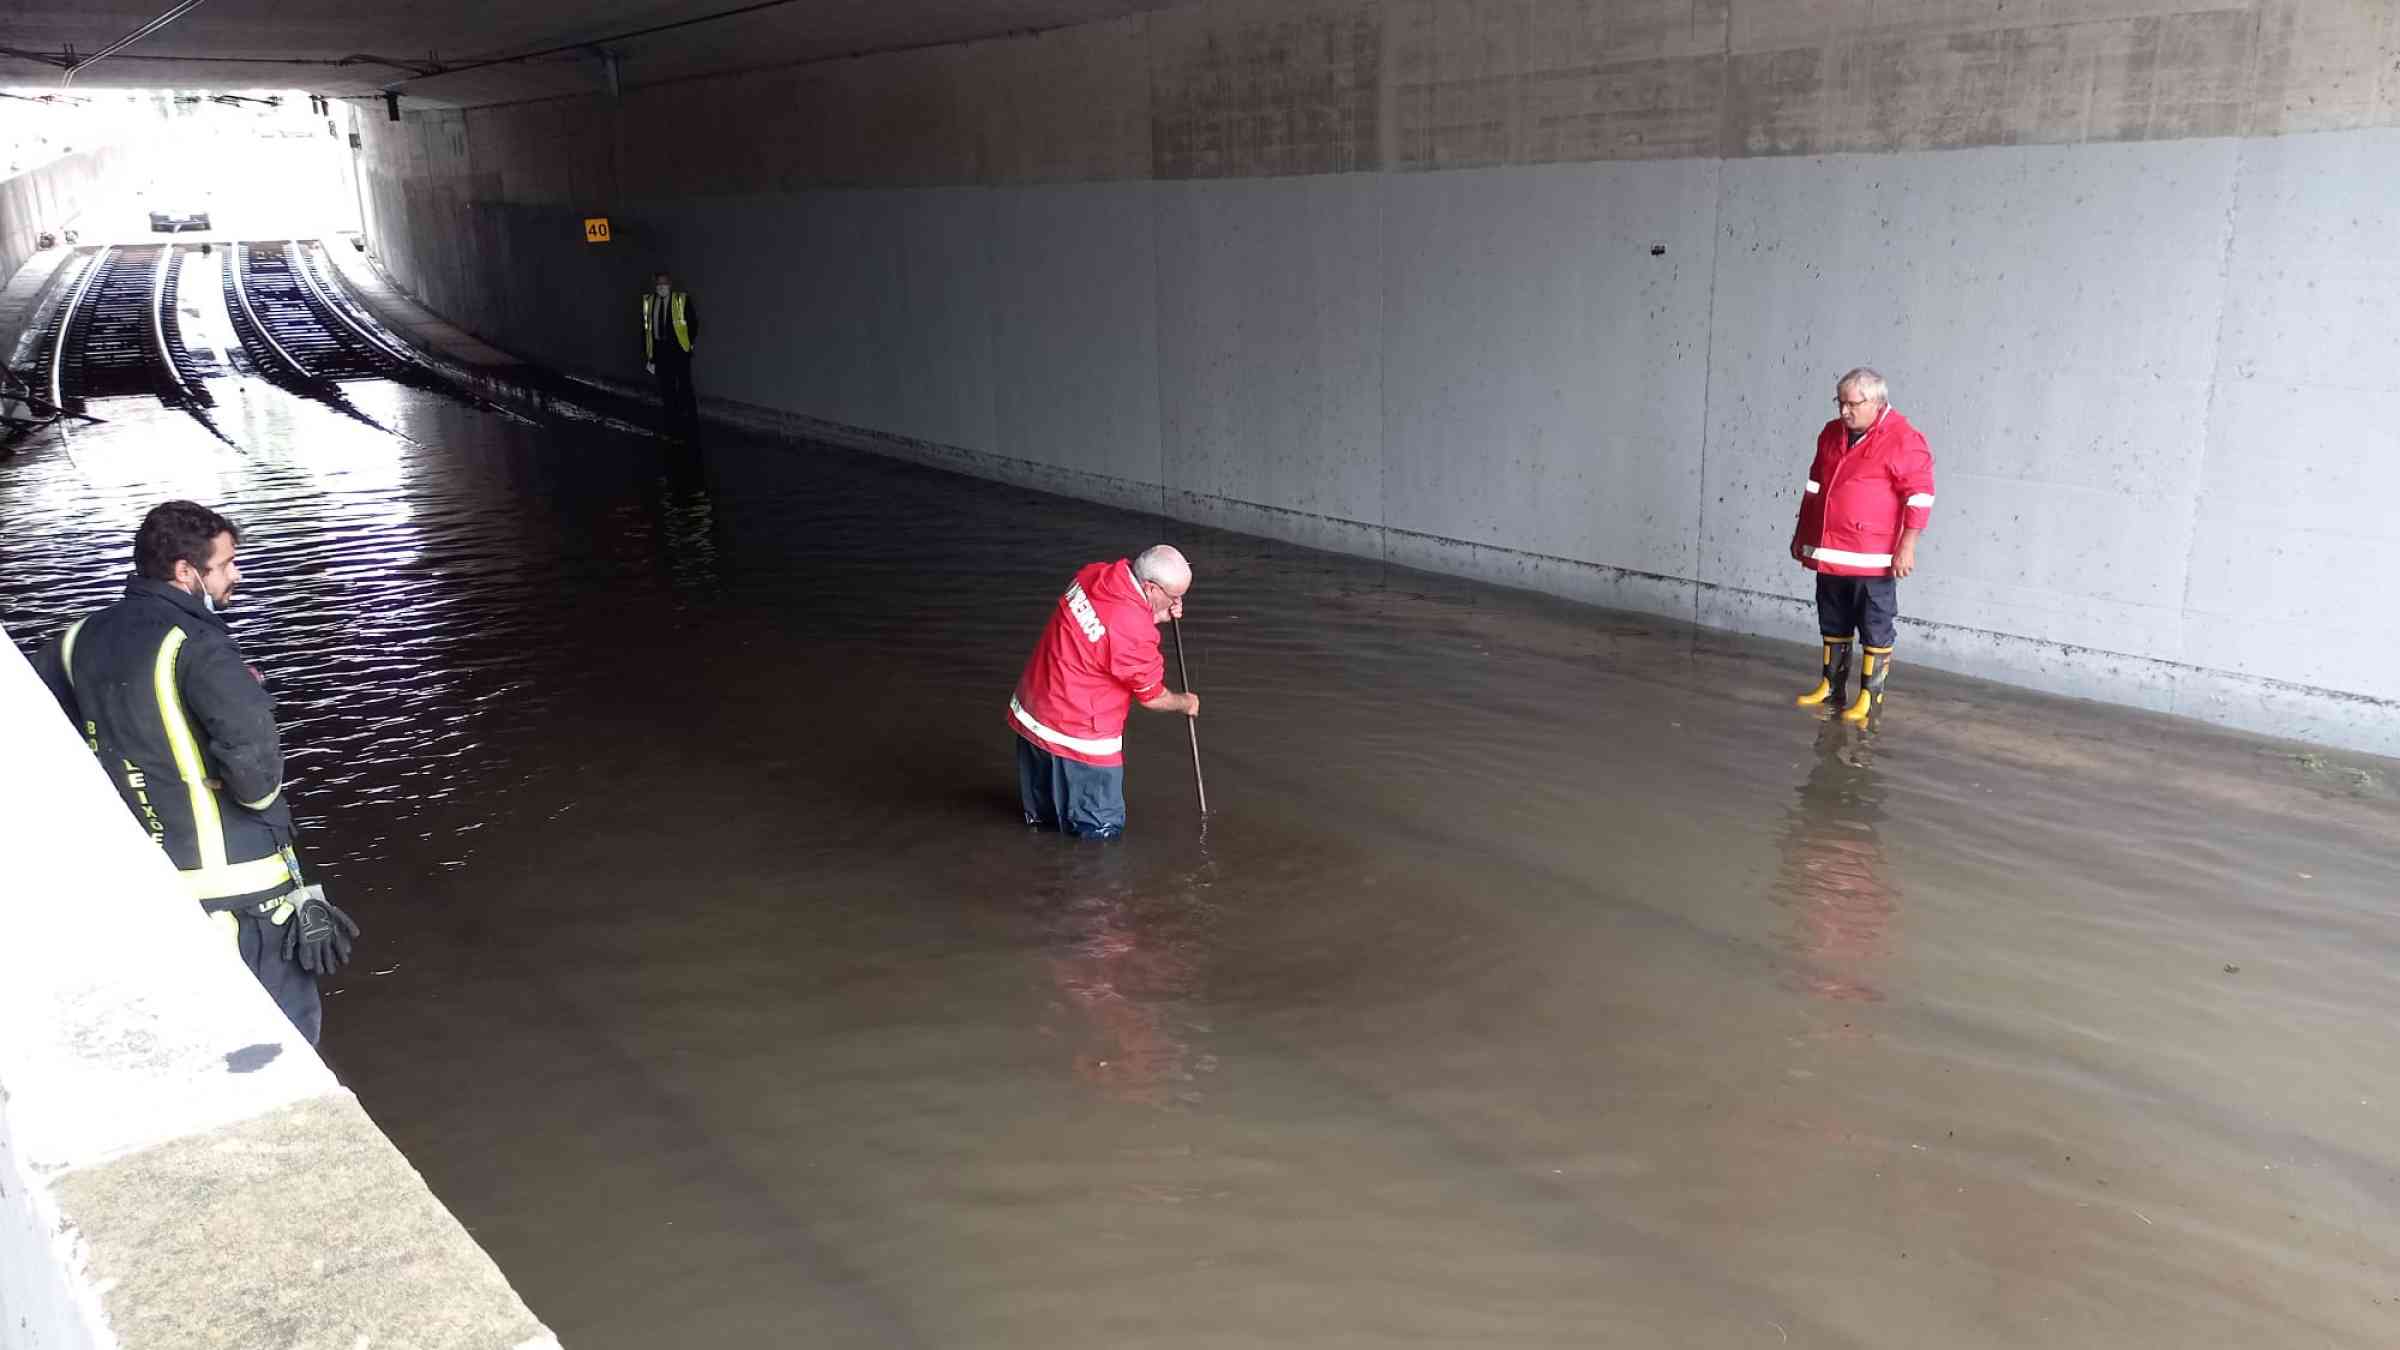 Tunnel flooding in Matosinhos Portugal